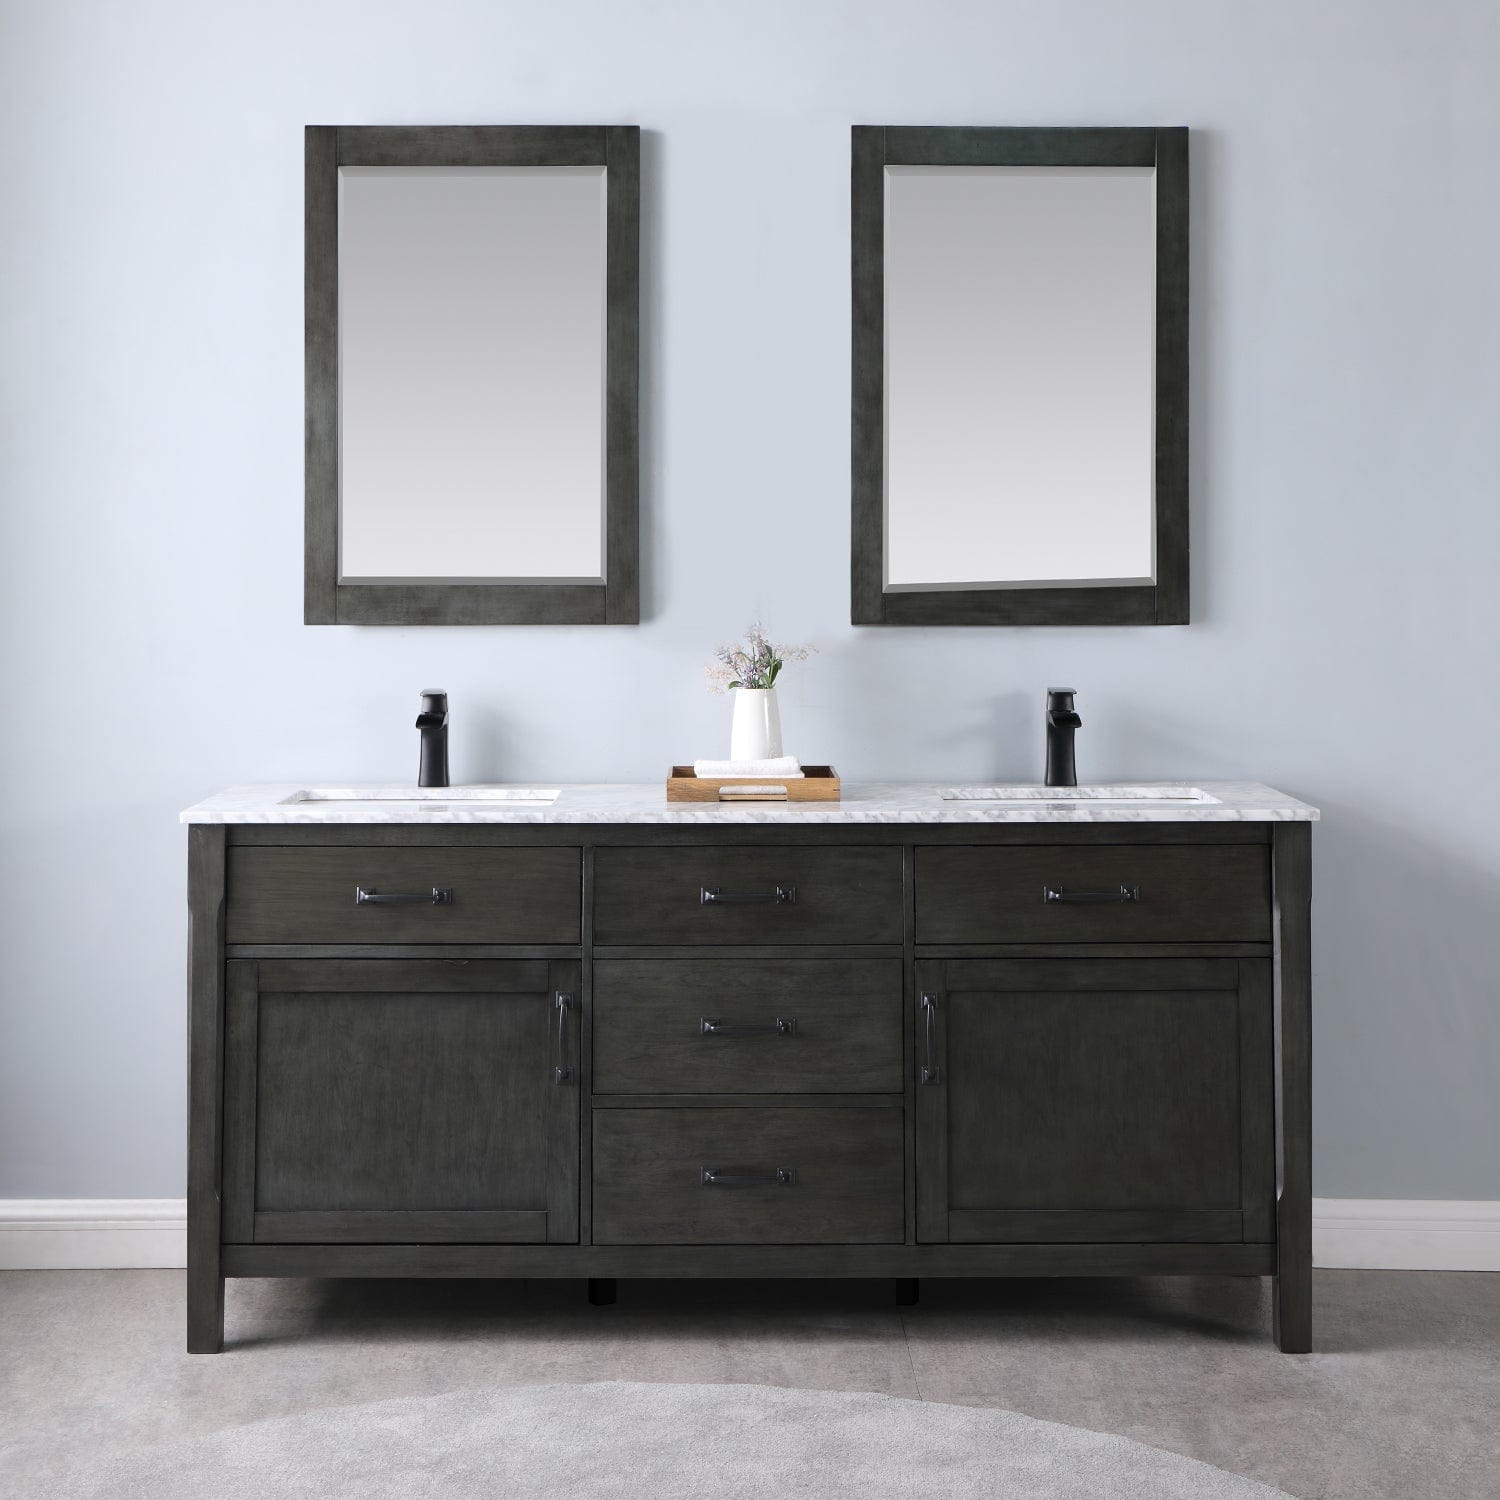 Altair Maribella 72" Double Bathroom Vanity Set in Rust Black and Carrara White Marble Countertop with Mirror 535072-RL-CA - Molaix631112970396Vanity535072-RL-CA